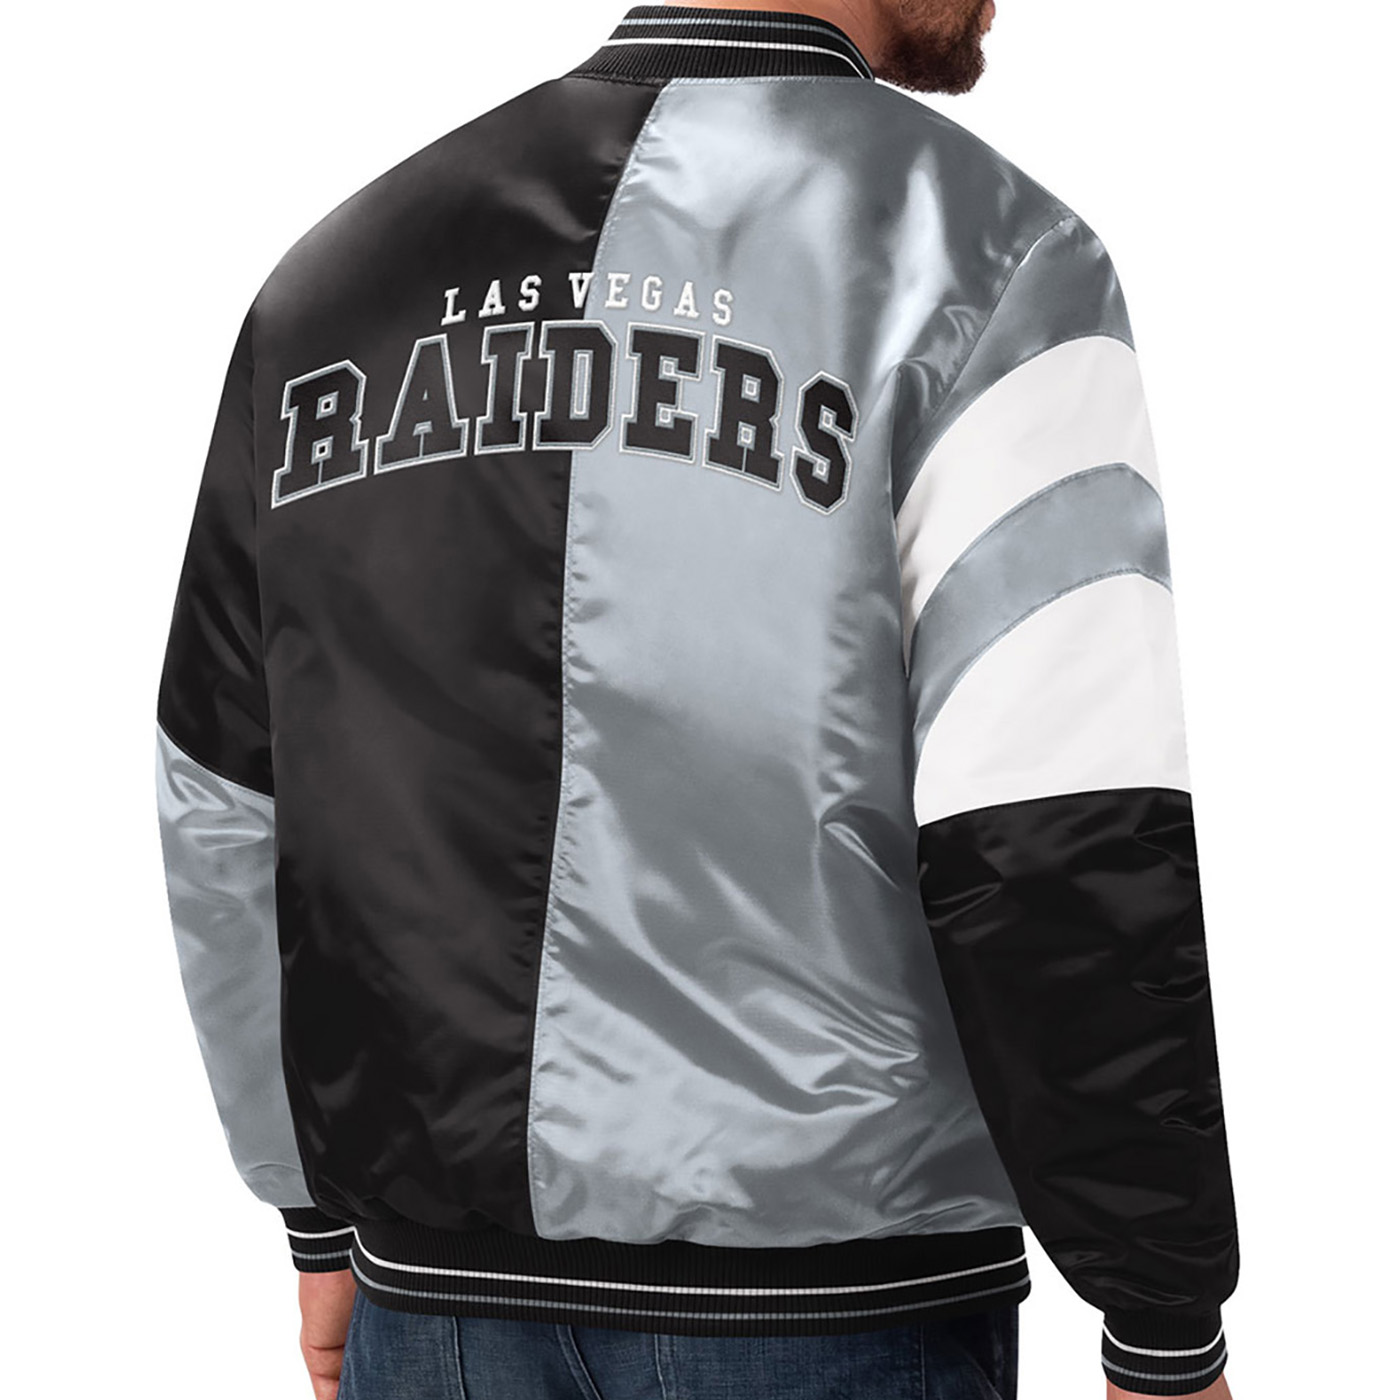 Las Vegas Raiders Bomber Satin Black and Grey Jacket